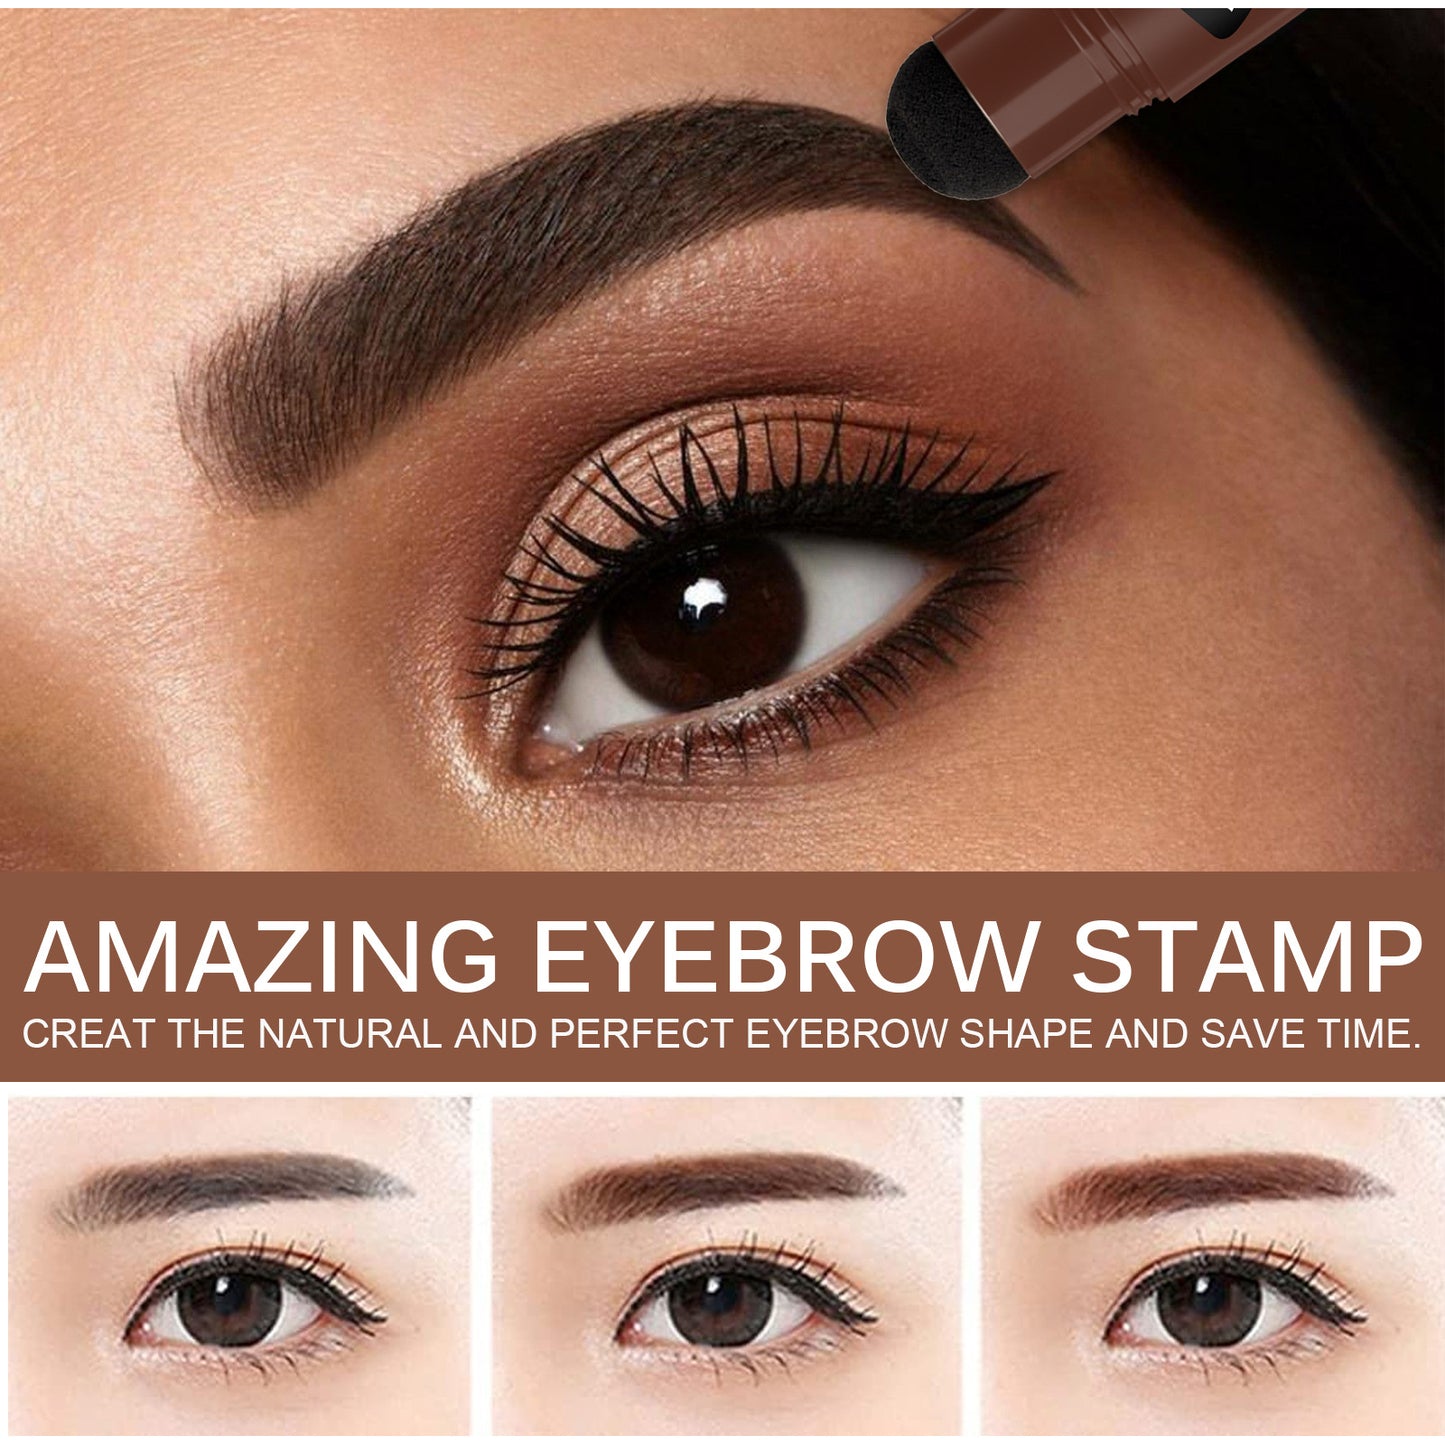 EELHOE Eyebrow Mold Waterproof and Sweat-proof Lazy Eyebrow Filling Hairline Powder